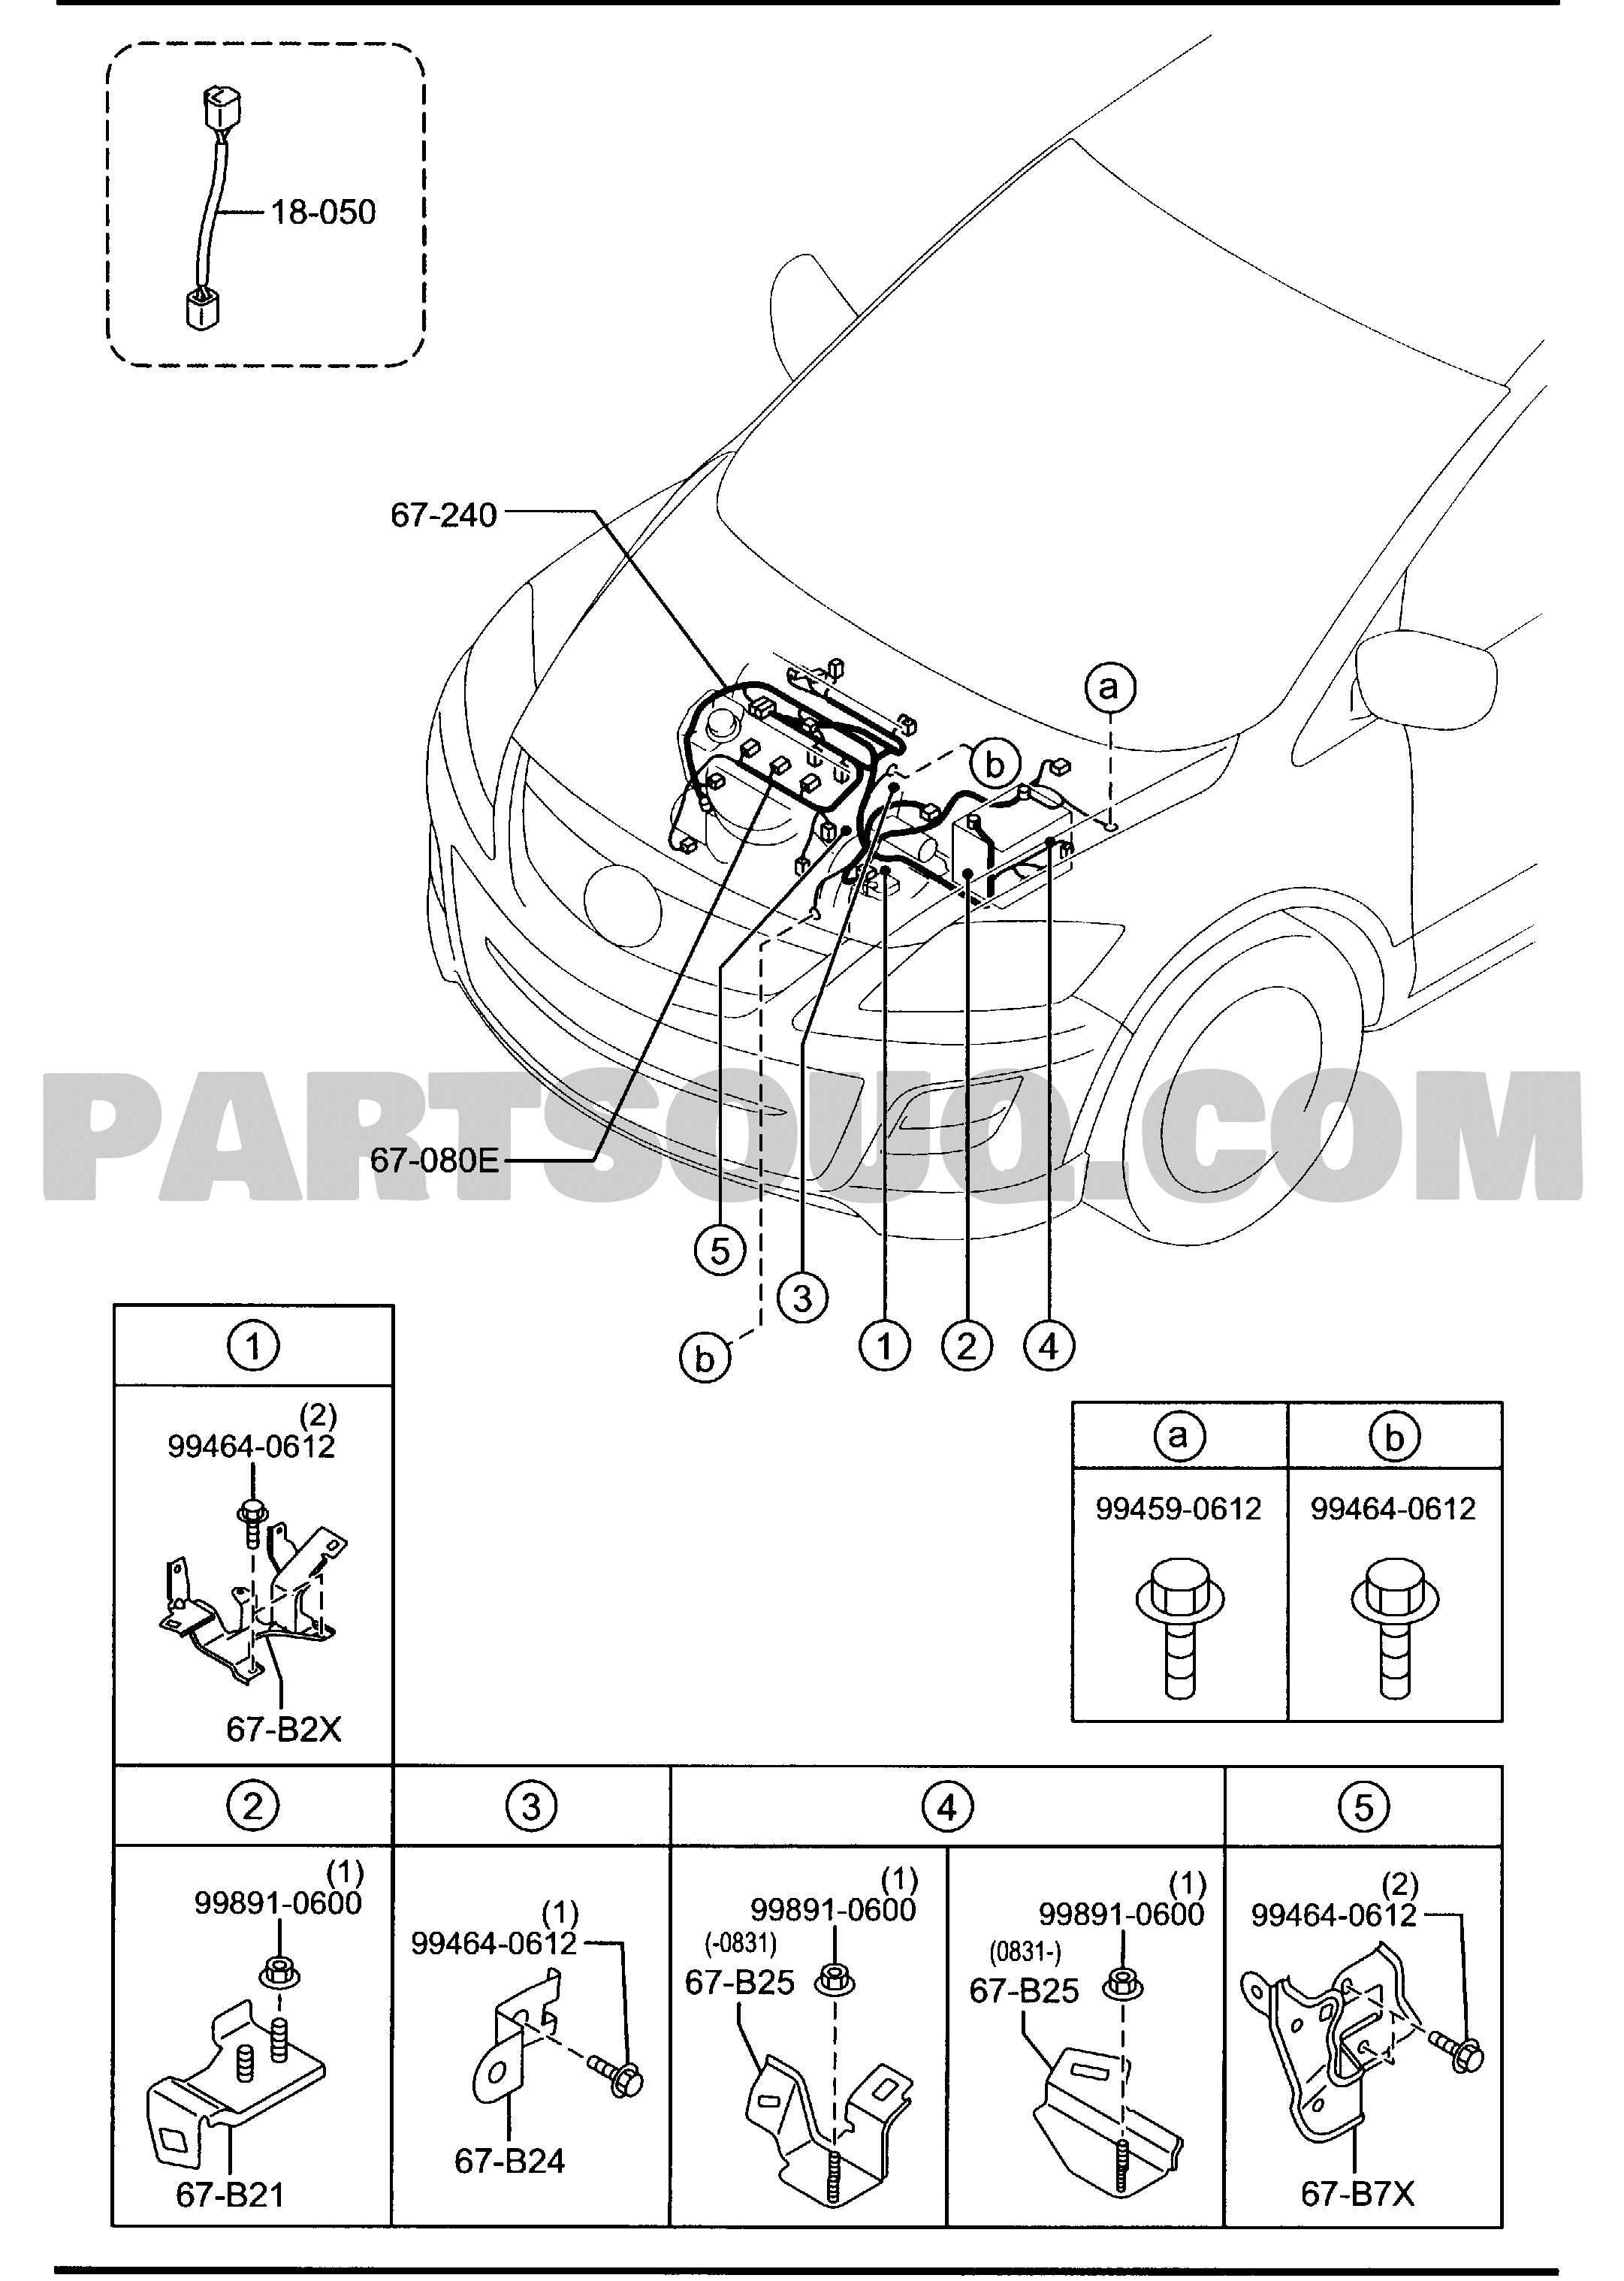 6701A - ENGINE & TRANSMISSION WIRING HARNESSES 01/01 | Mazda CX-9 